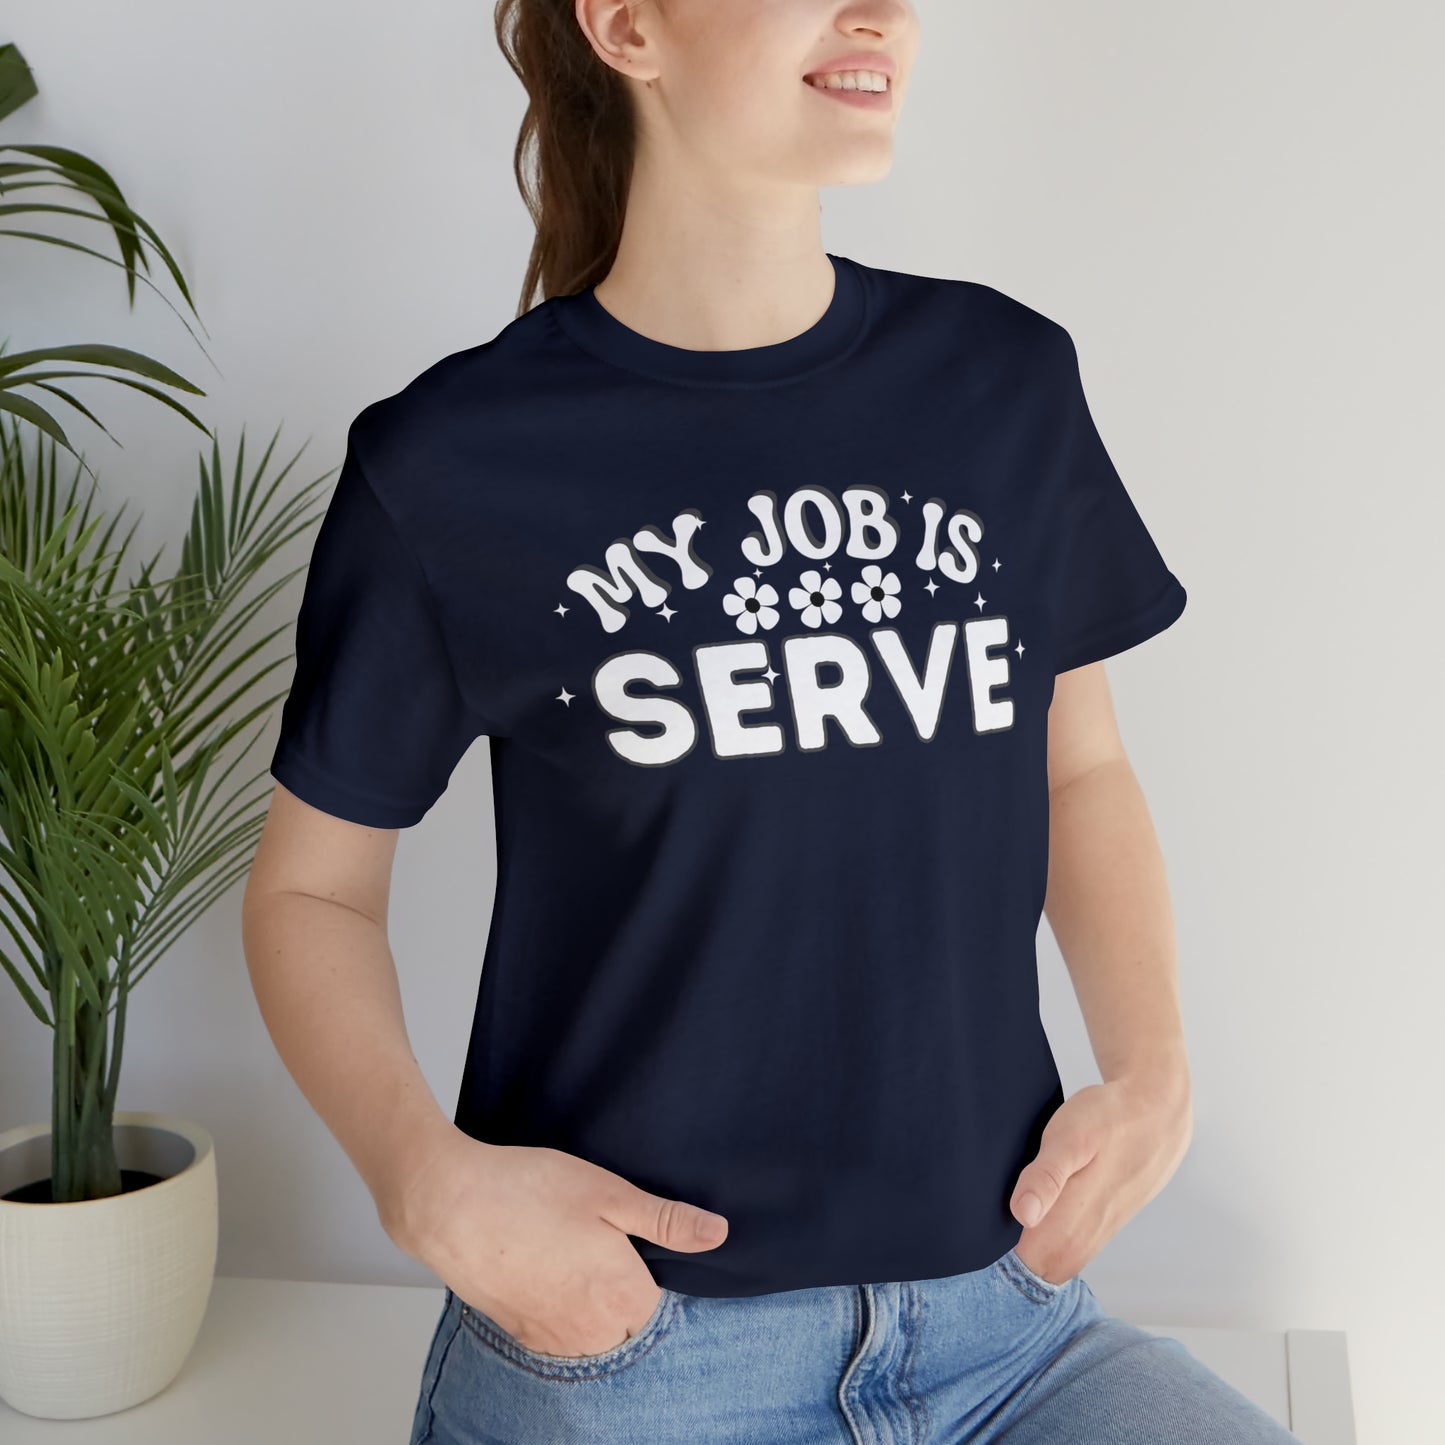 My Job is Serve Shirt Military Shirt Customer Service Shirt Waiter/Waitress Public Servant, Hotel Concierge, Caterer, Flight Attendant, Bartender Barista